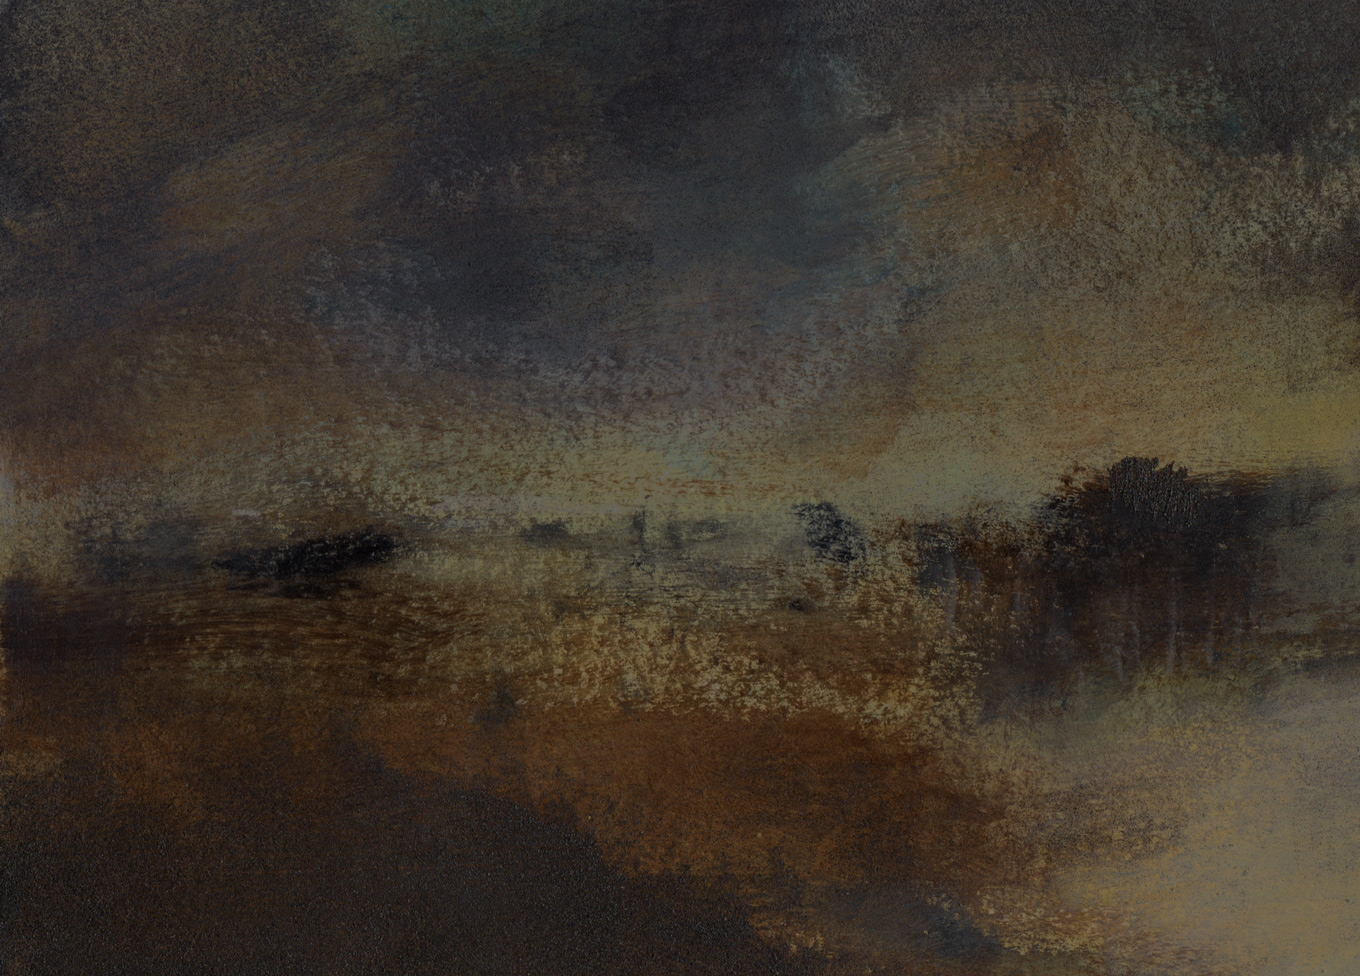 L1027 - Nicholas Herbert, British Artist, landscape painting of a view across farmland, mixed media 2017